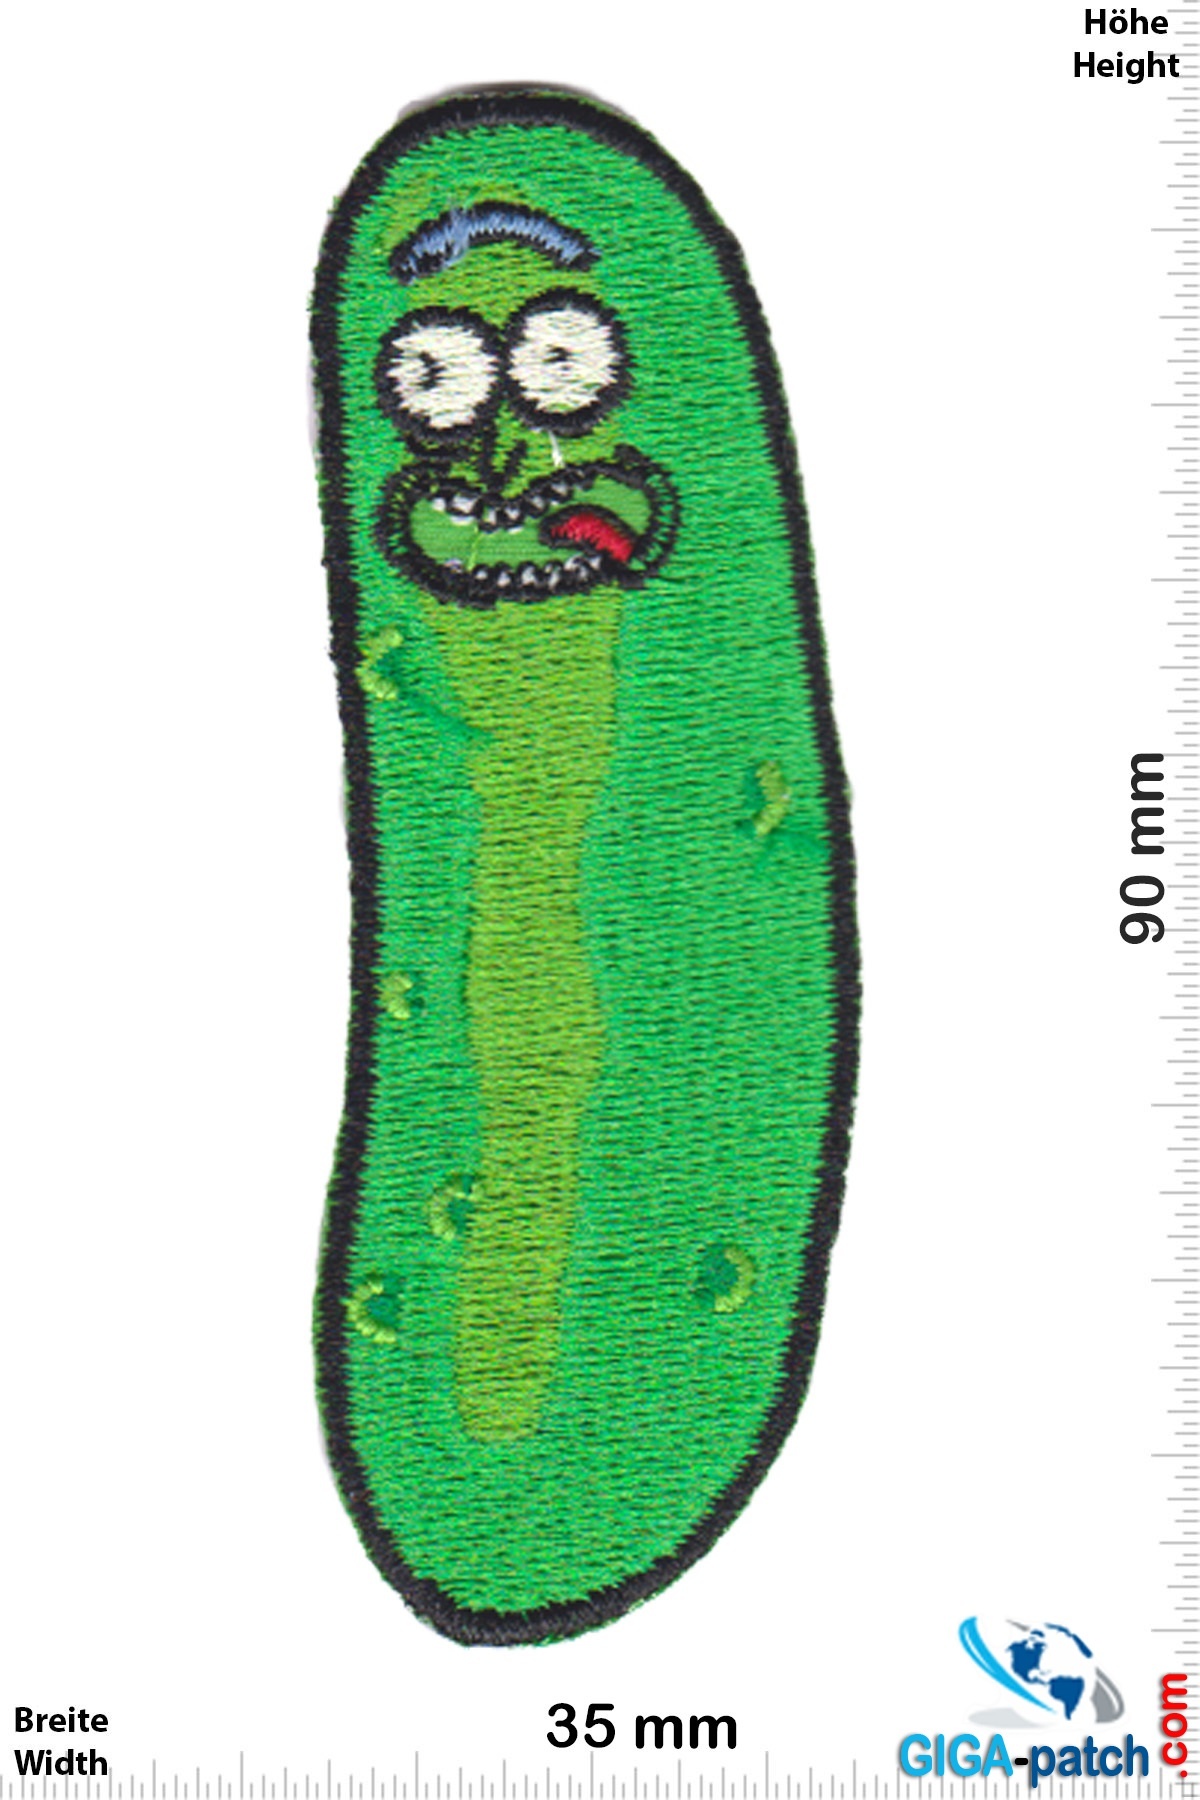 Fun Pickle Rick - Gurken Kopf